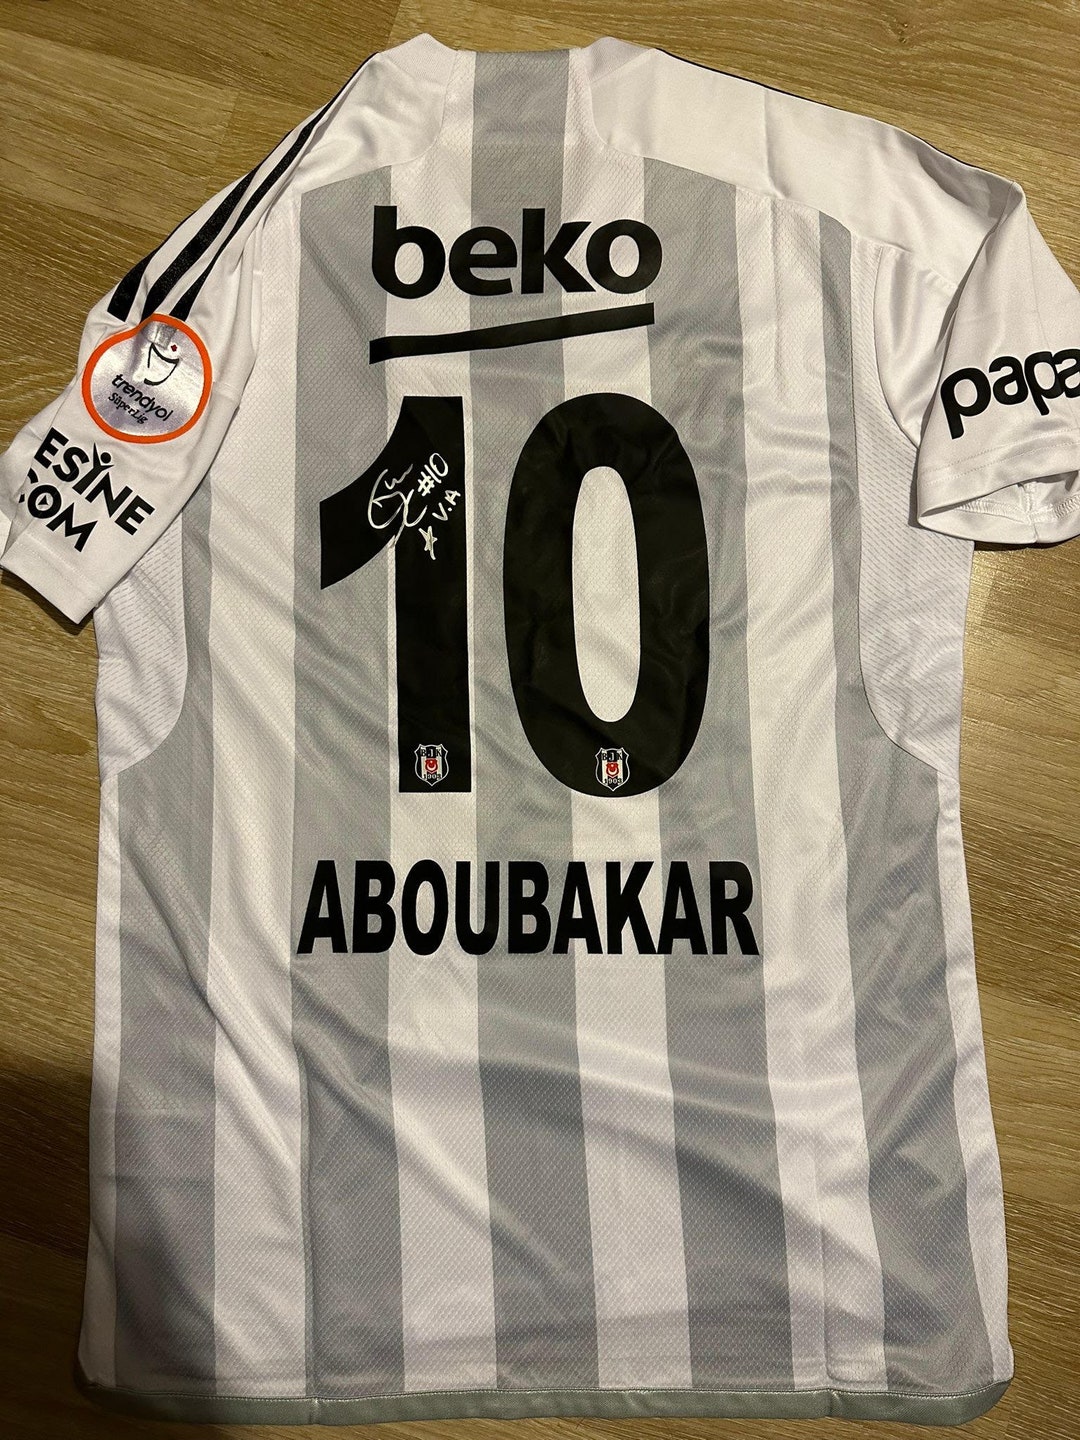 Aboubakar será jogador do Besiktas